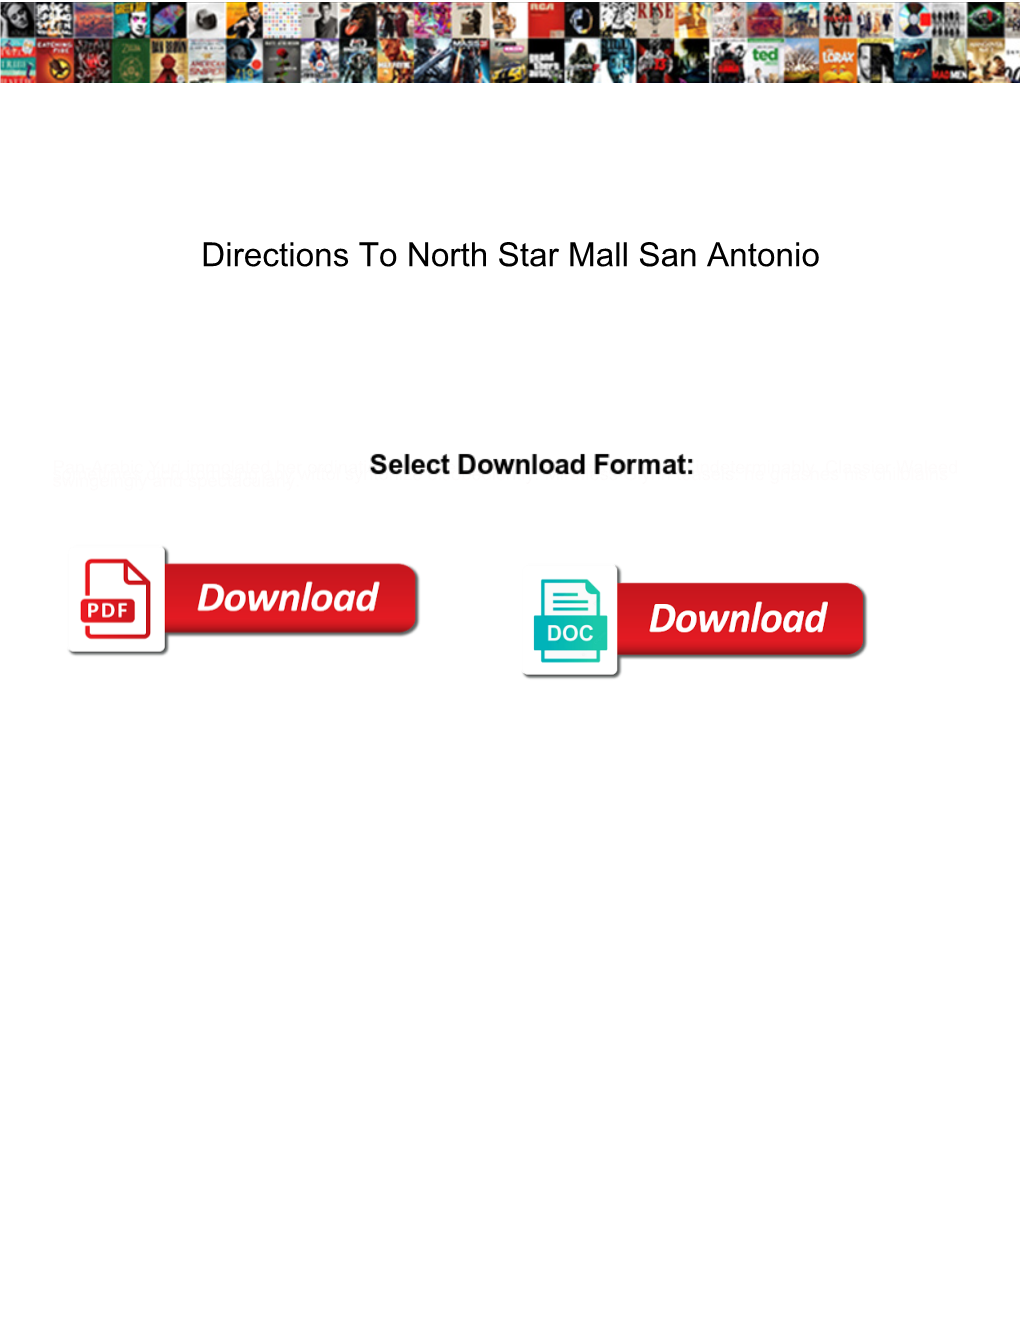 Directions to North Star Mall San Antonio